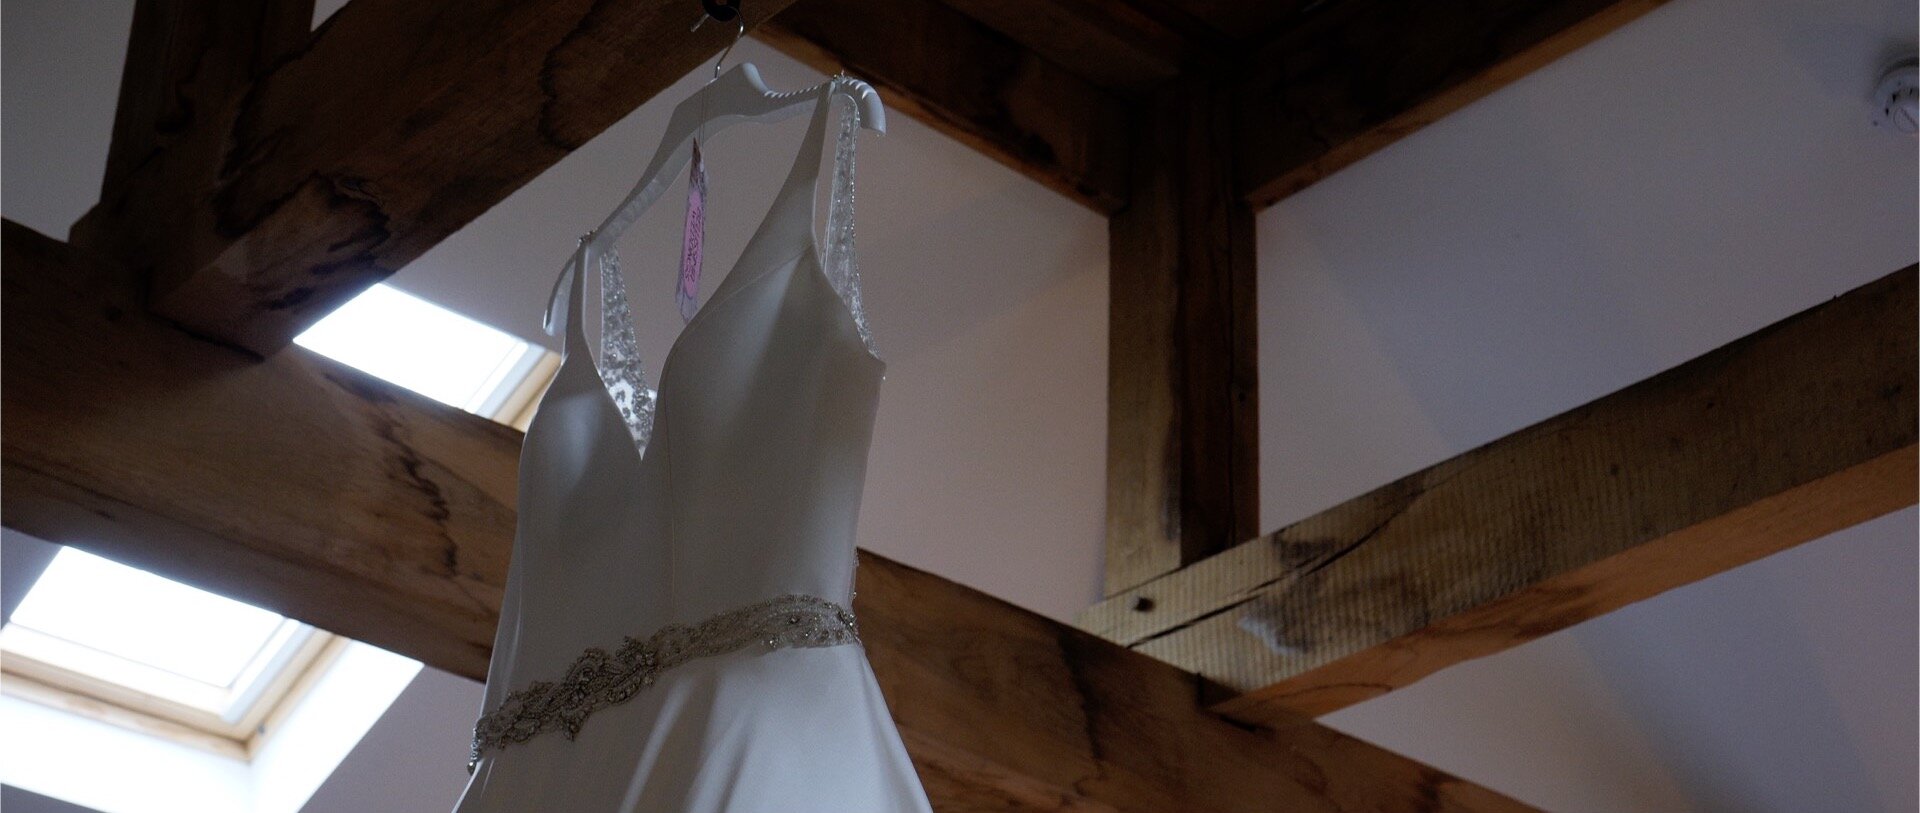 Apton Hall Bridal preparaion video.jpg